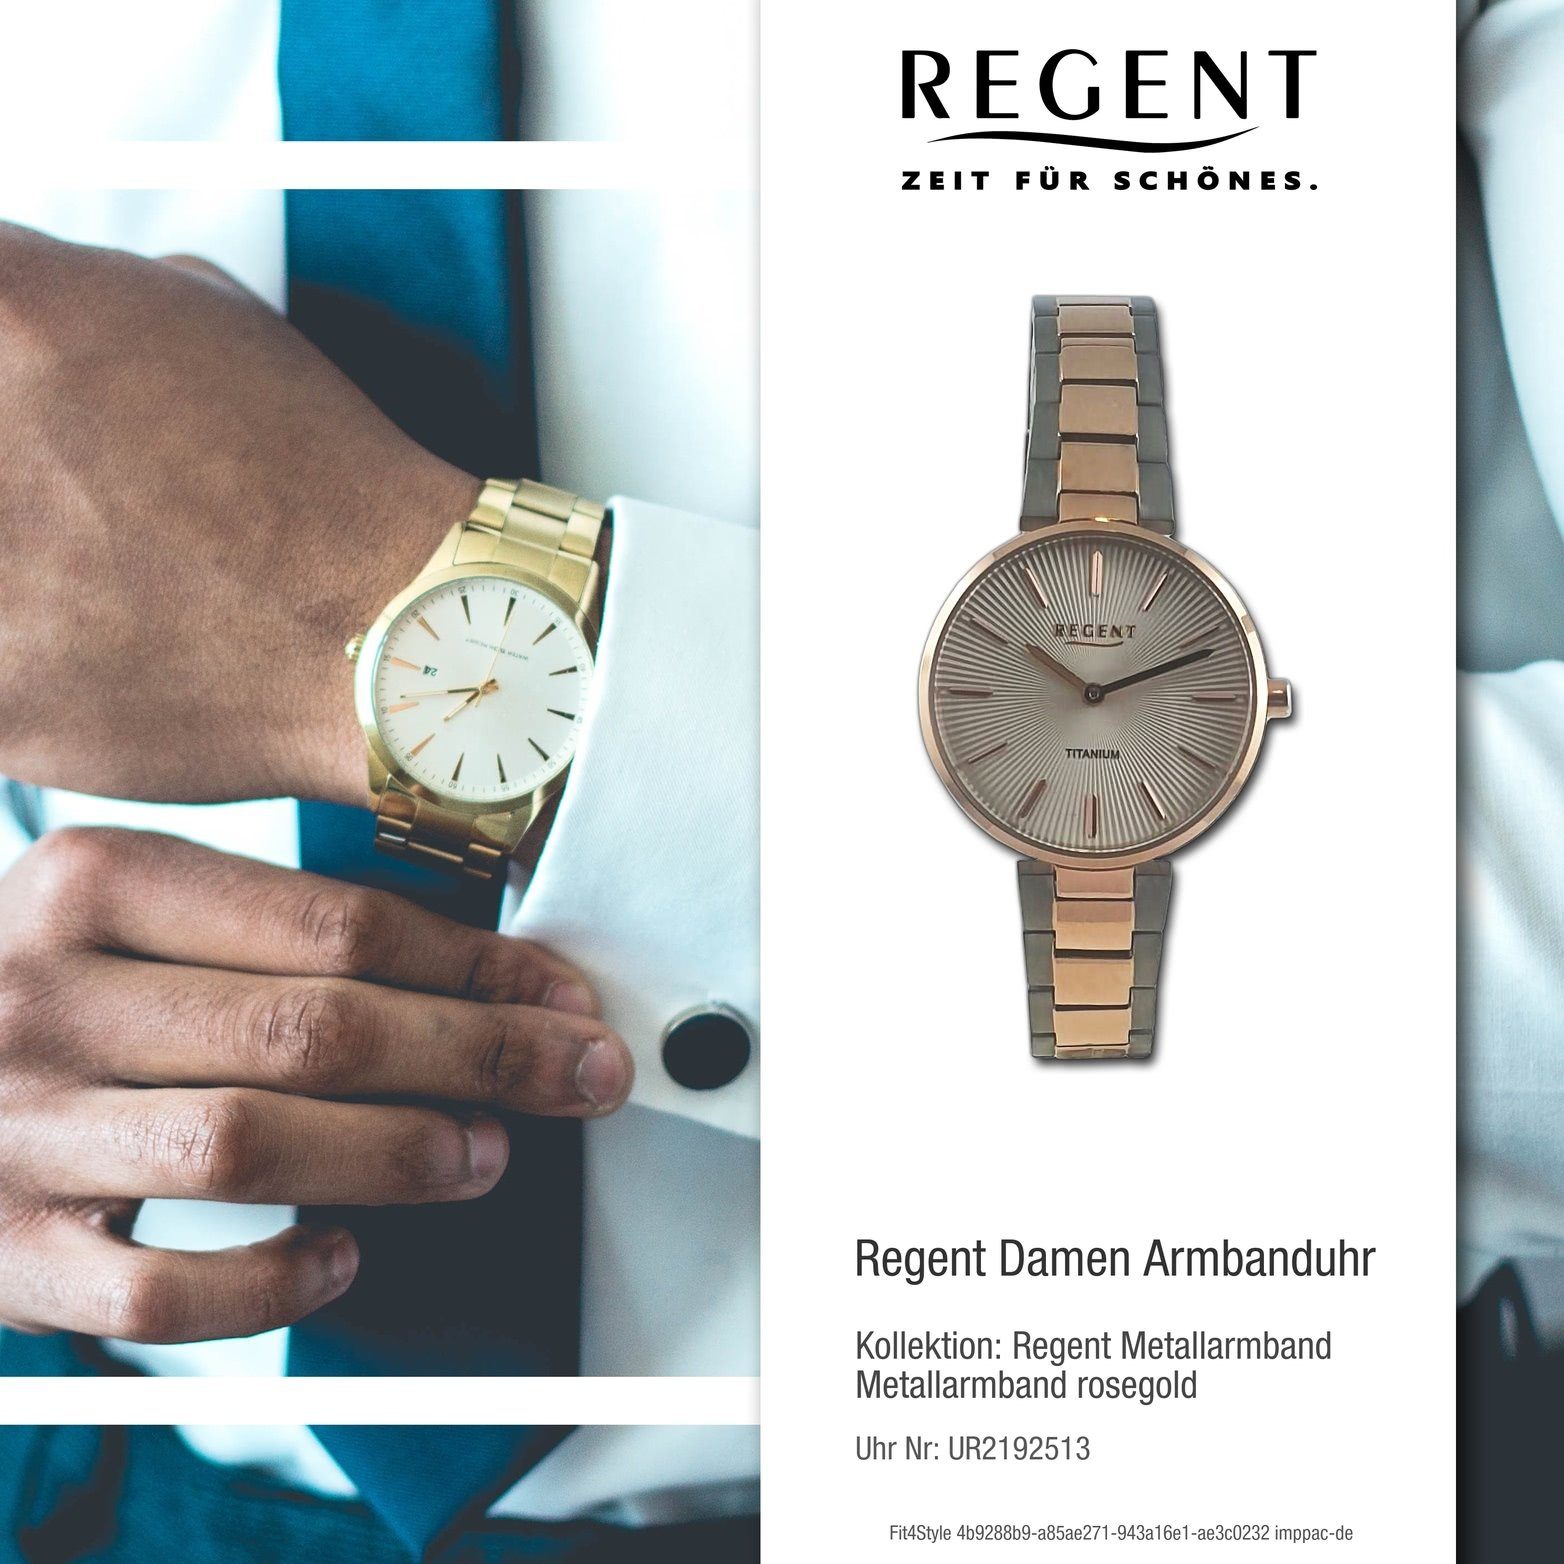 Gehäuse, rundes rosegold, Armbanduhr Damenuhr Metallarmband (30mm) groß Quarzuhr silber, Regent Damen Analog, Regent